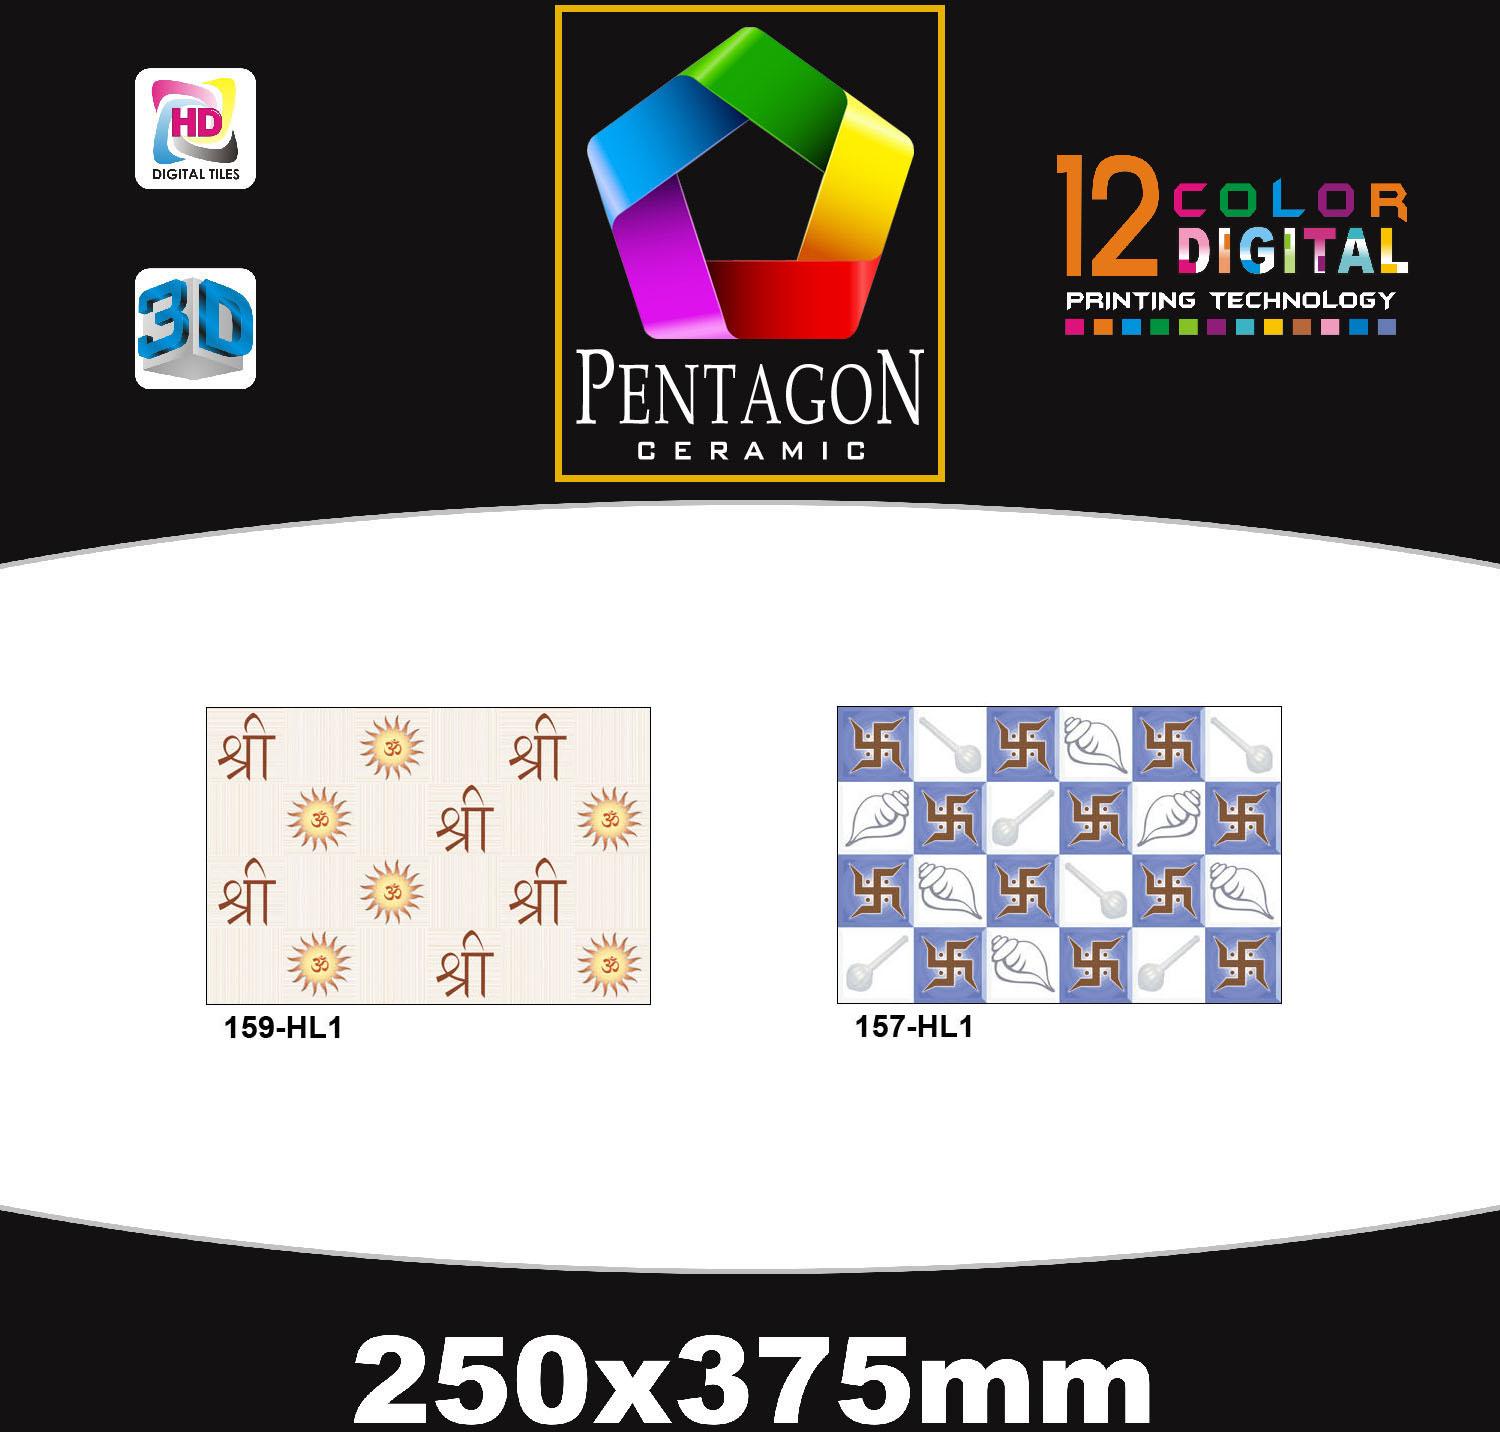 157 - 10x15 Digital Wall Tiles